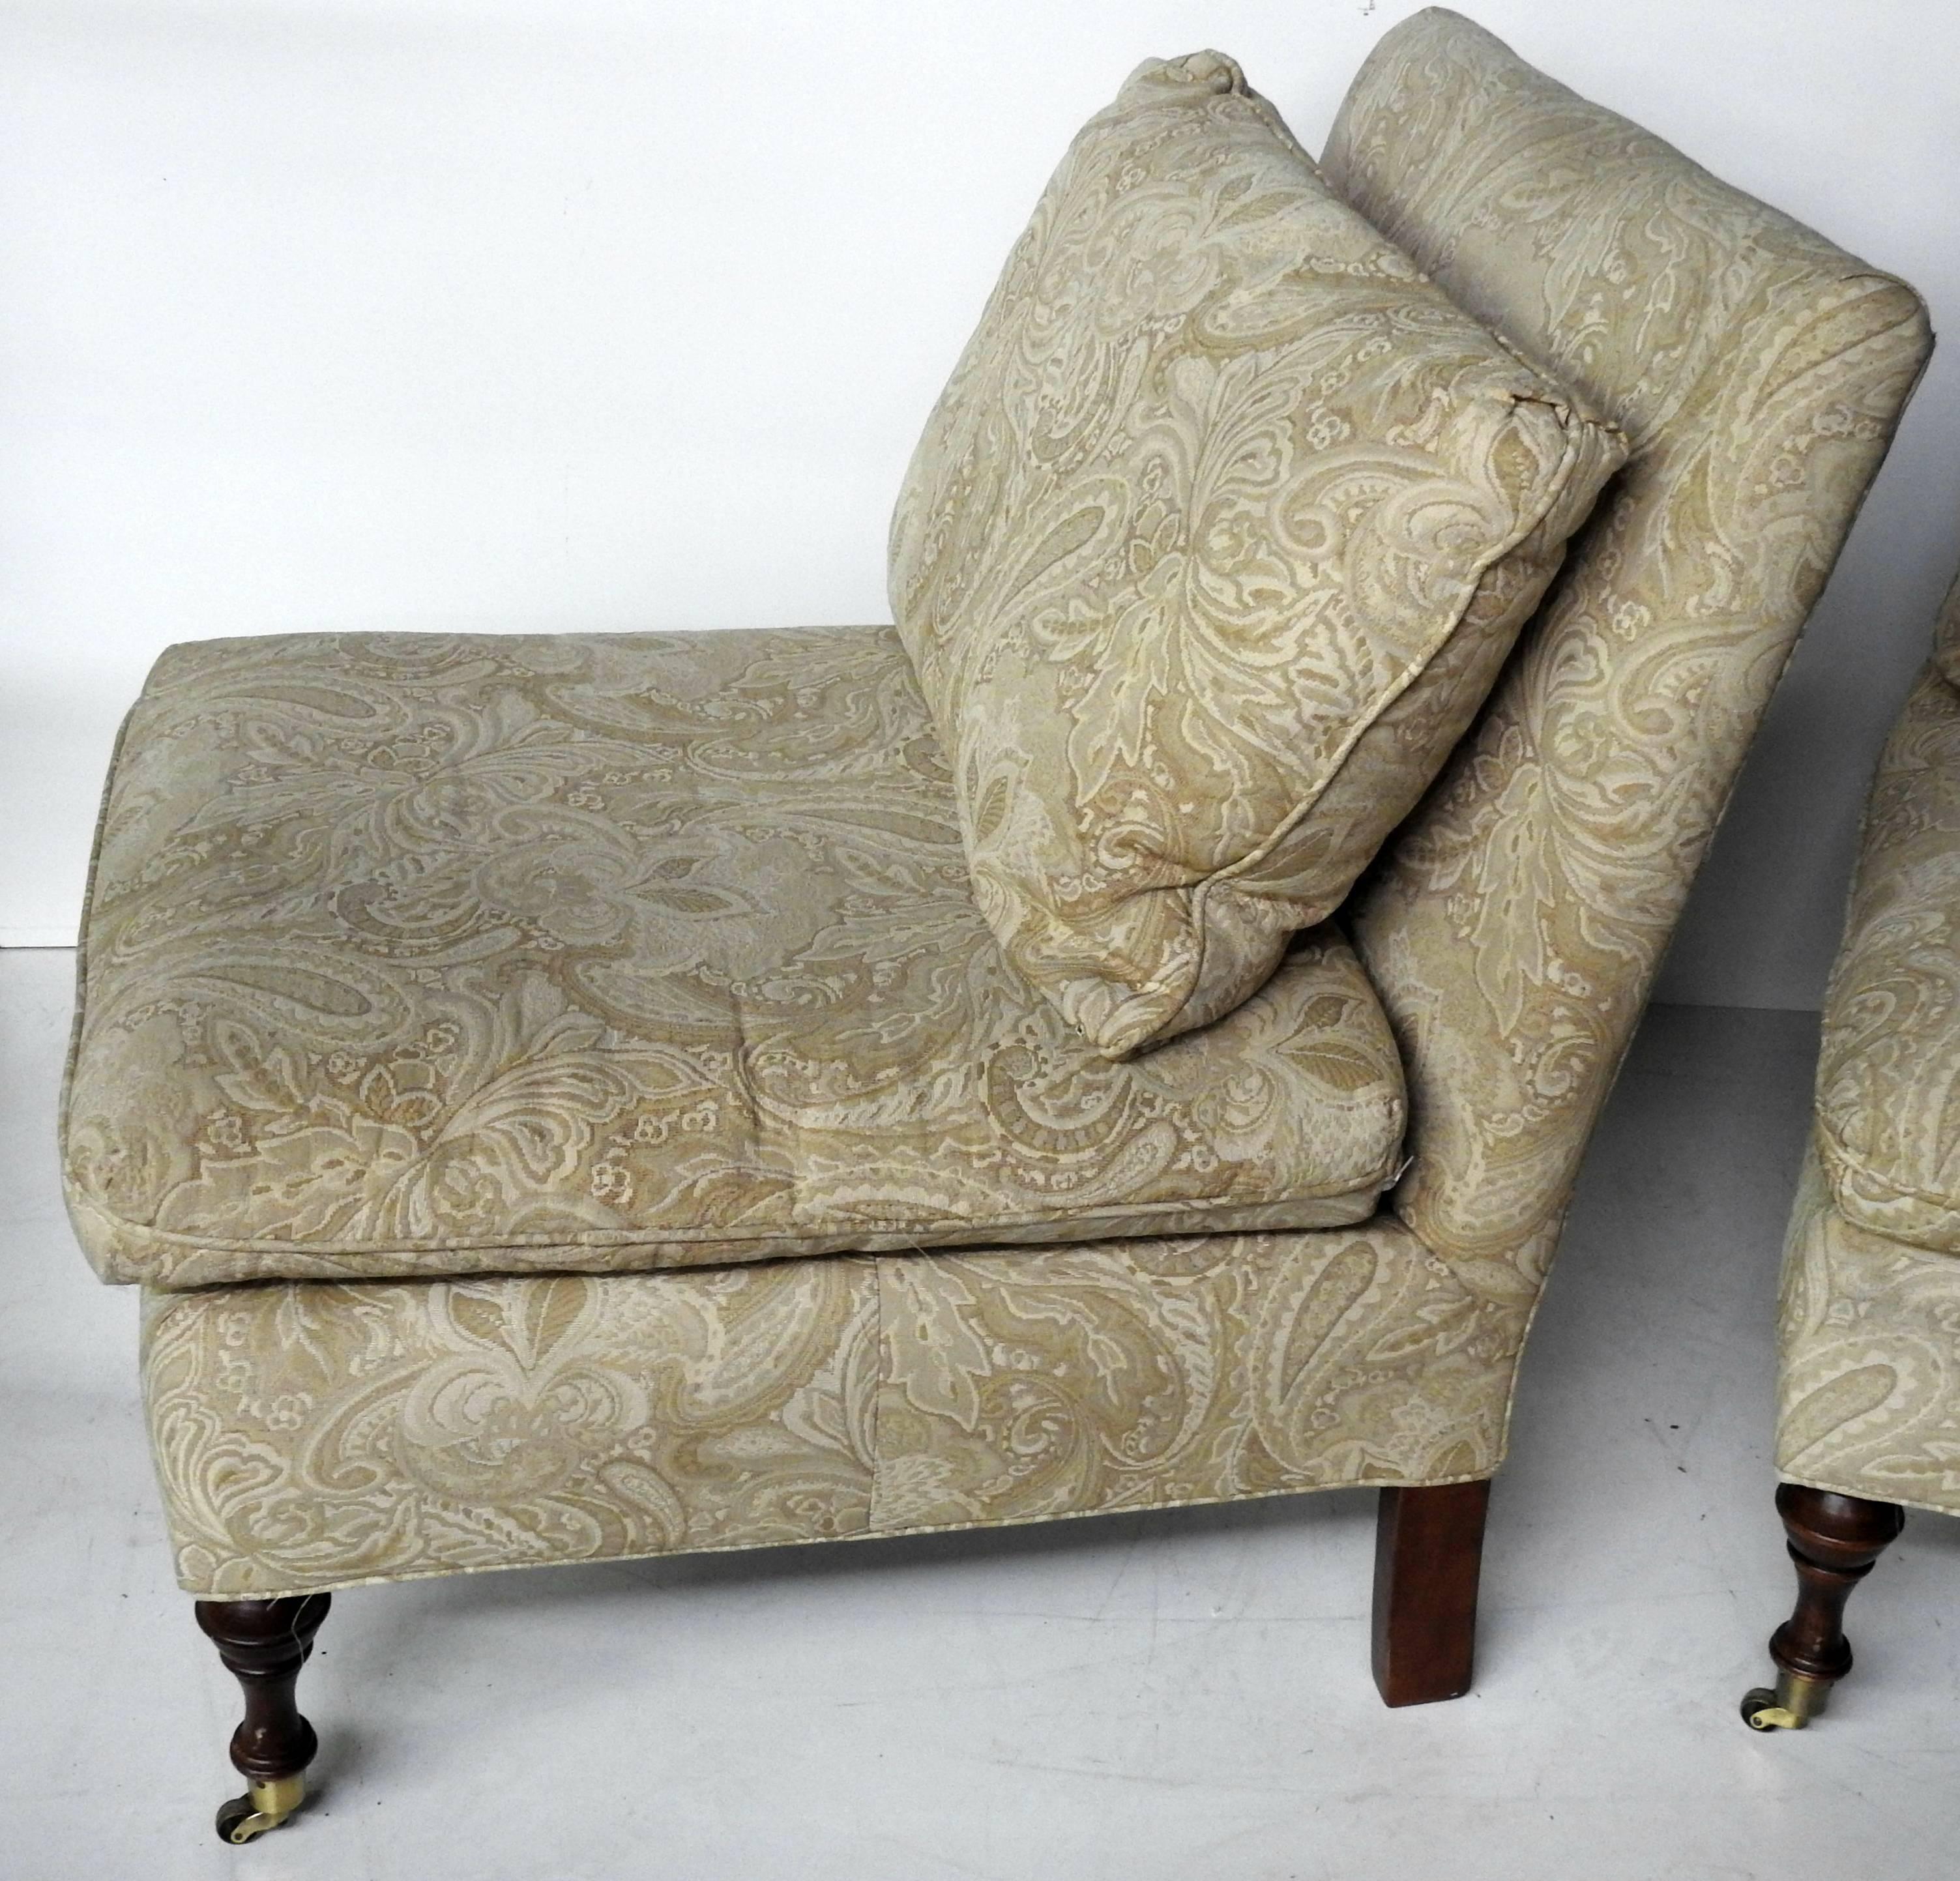 Mahogany Pair of Regency Style Slipper Chairs